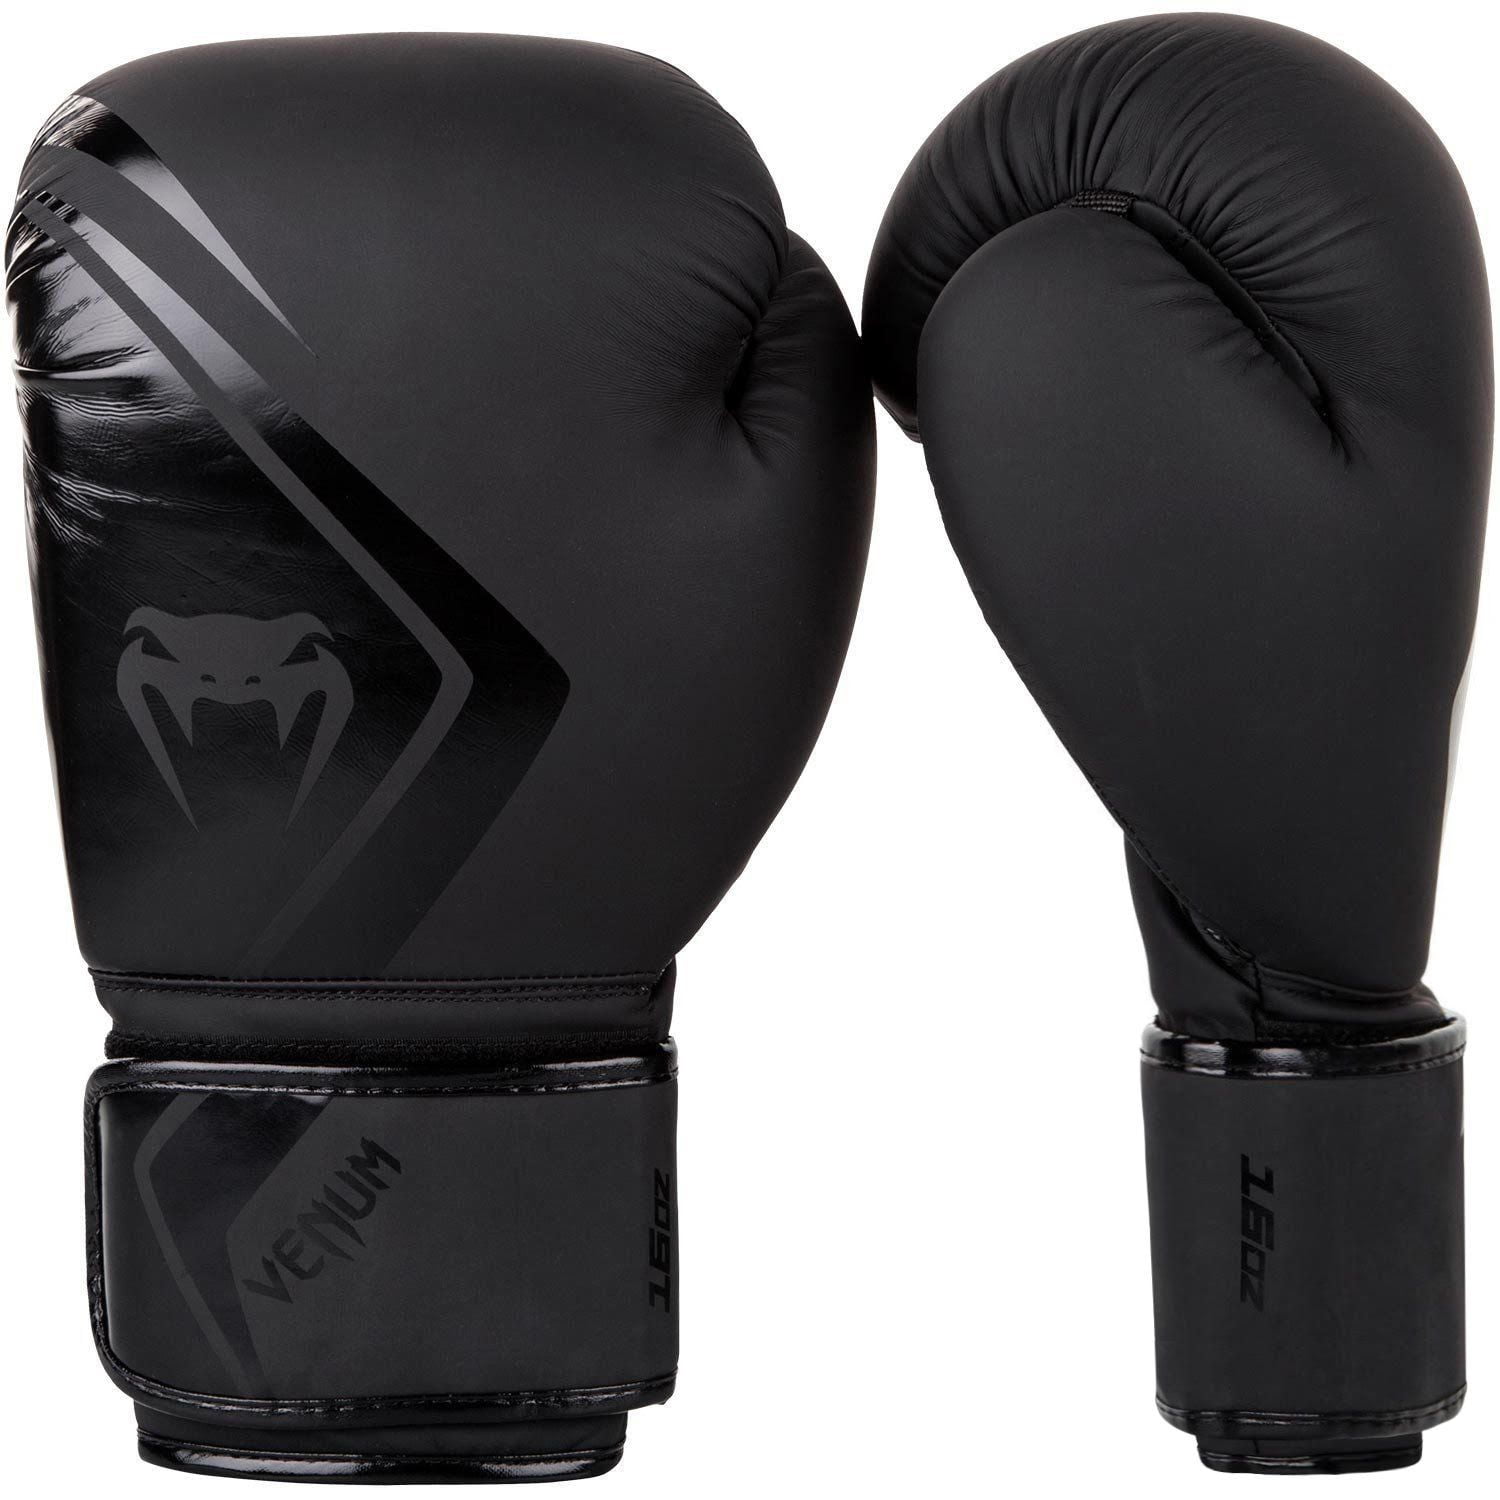 Venum Contender Boxing Gloves 